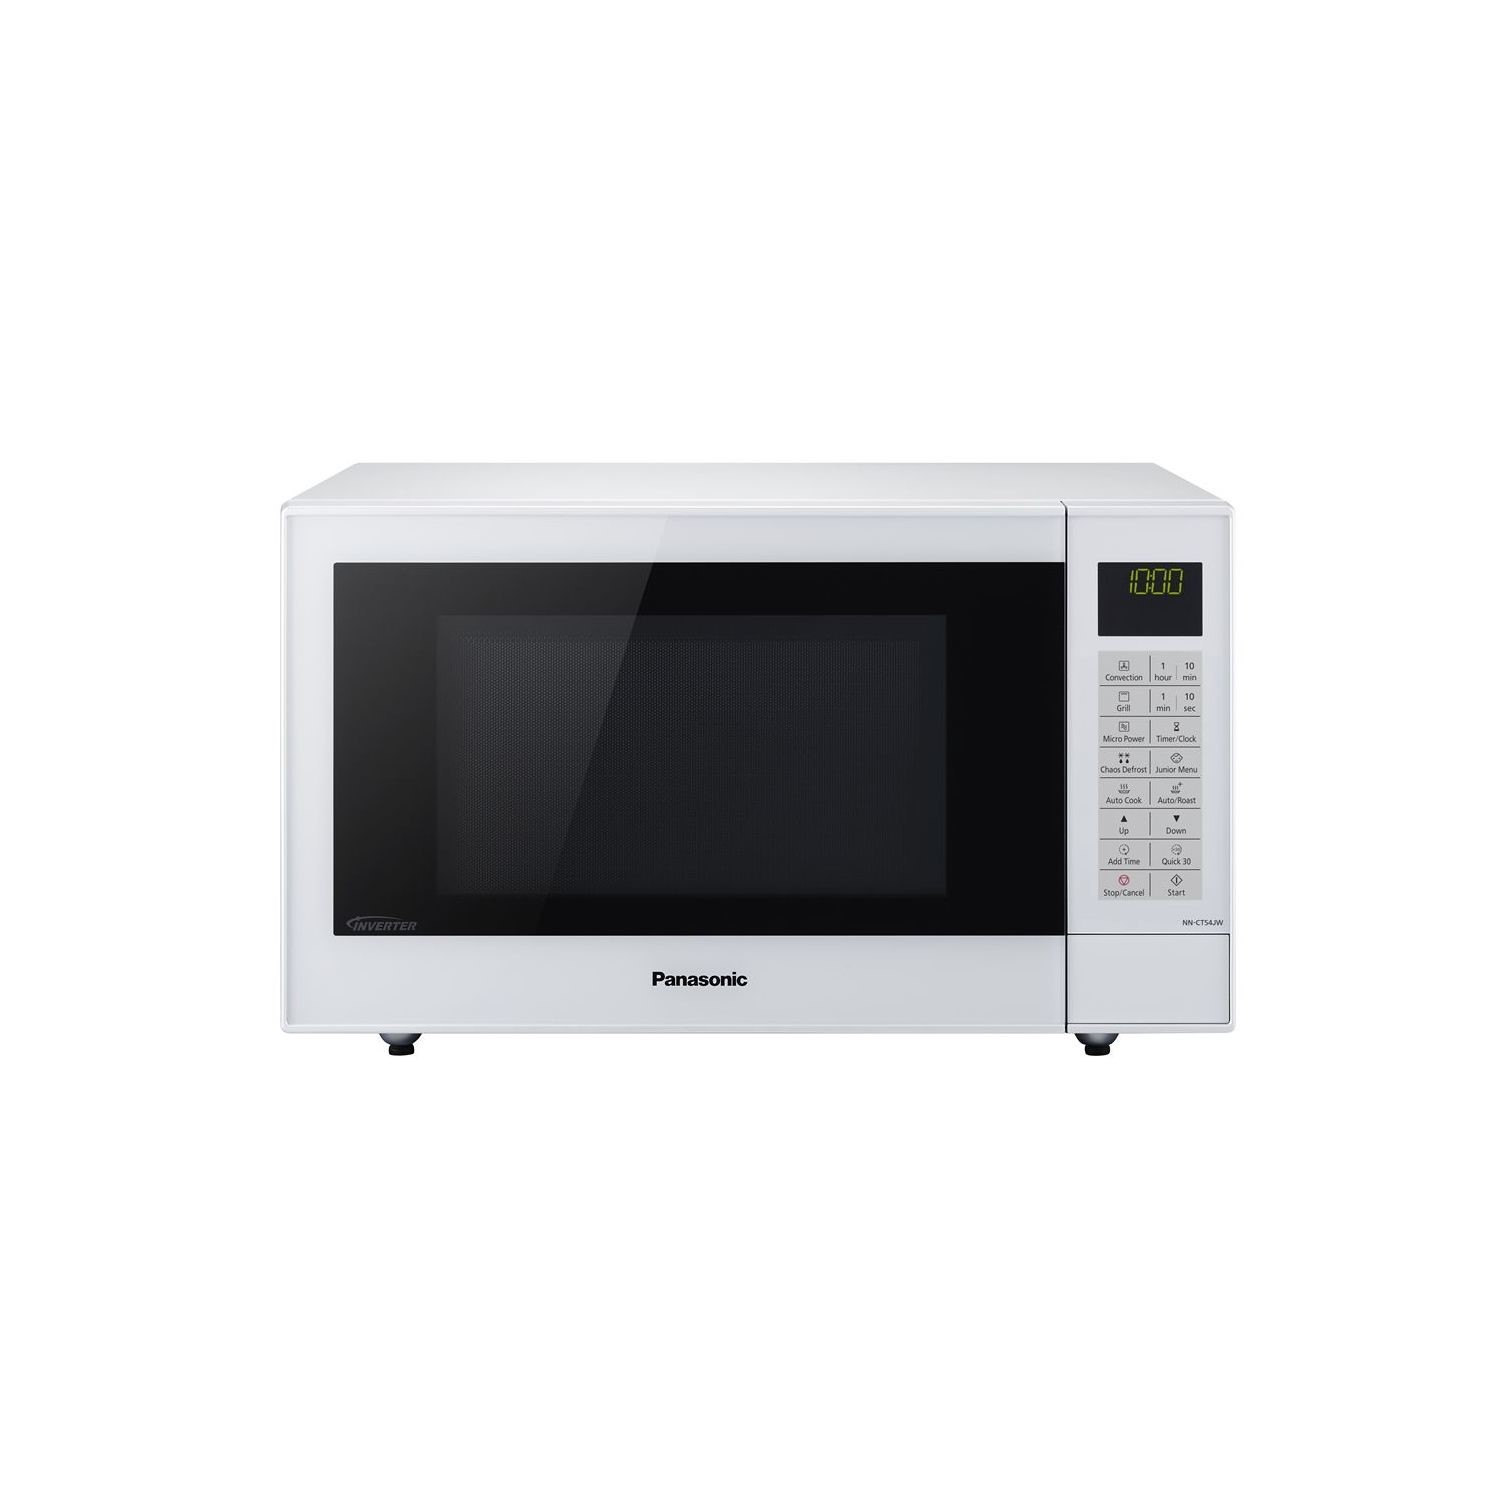 Panasonic 27L Combination Microwave Oven - White